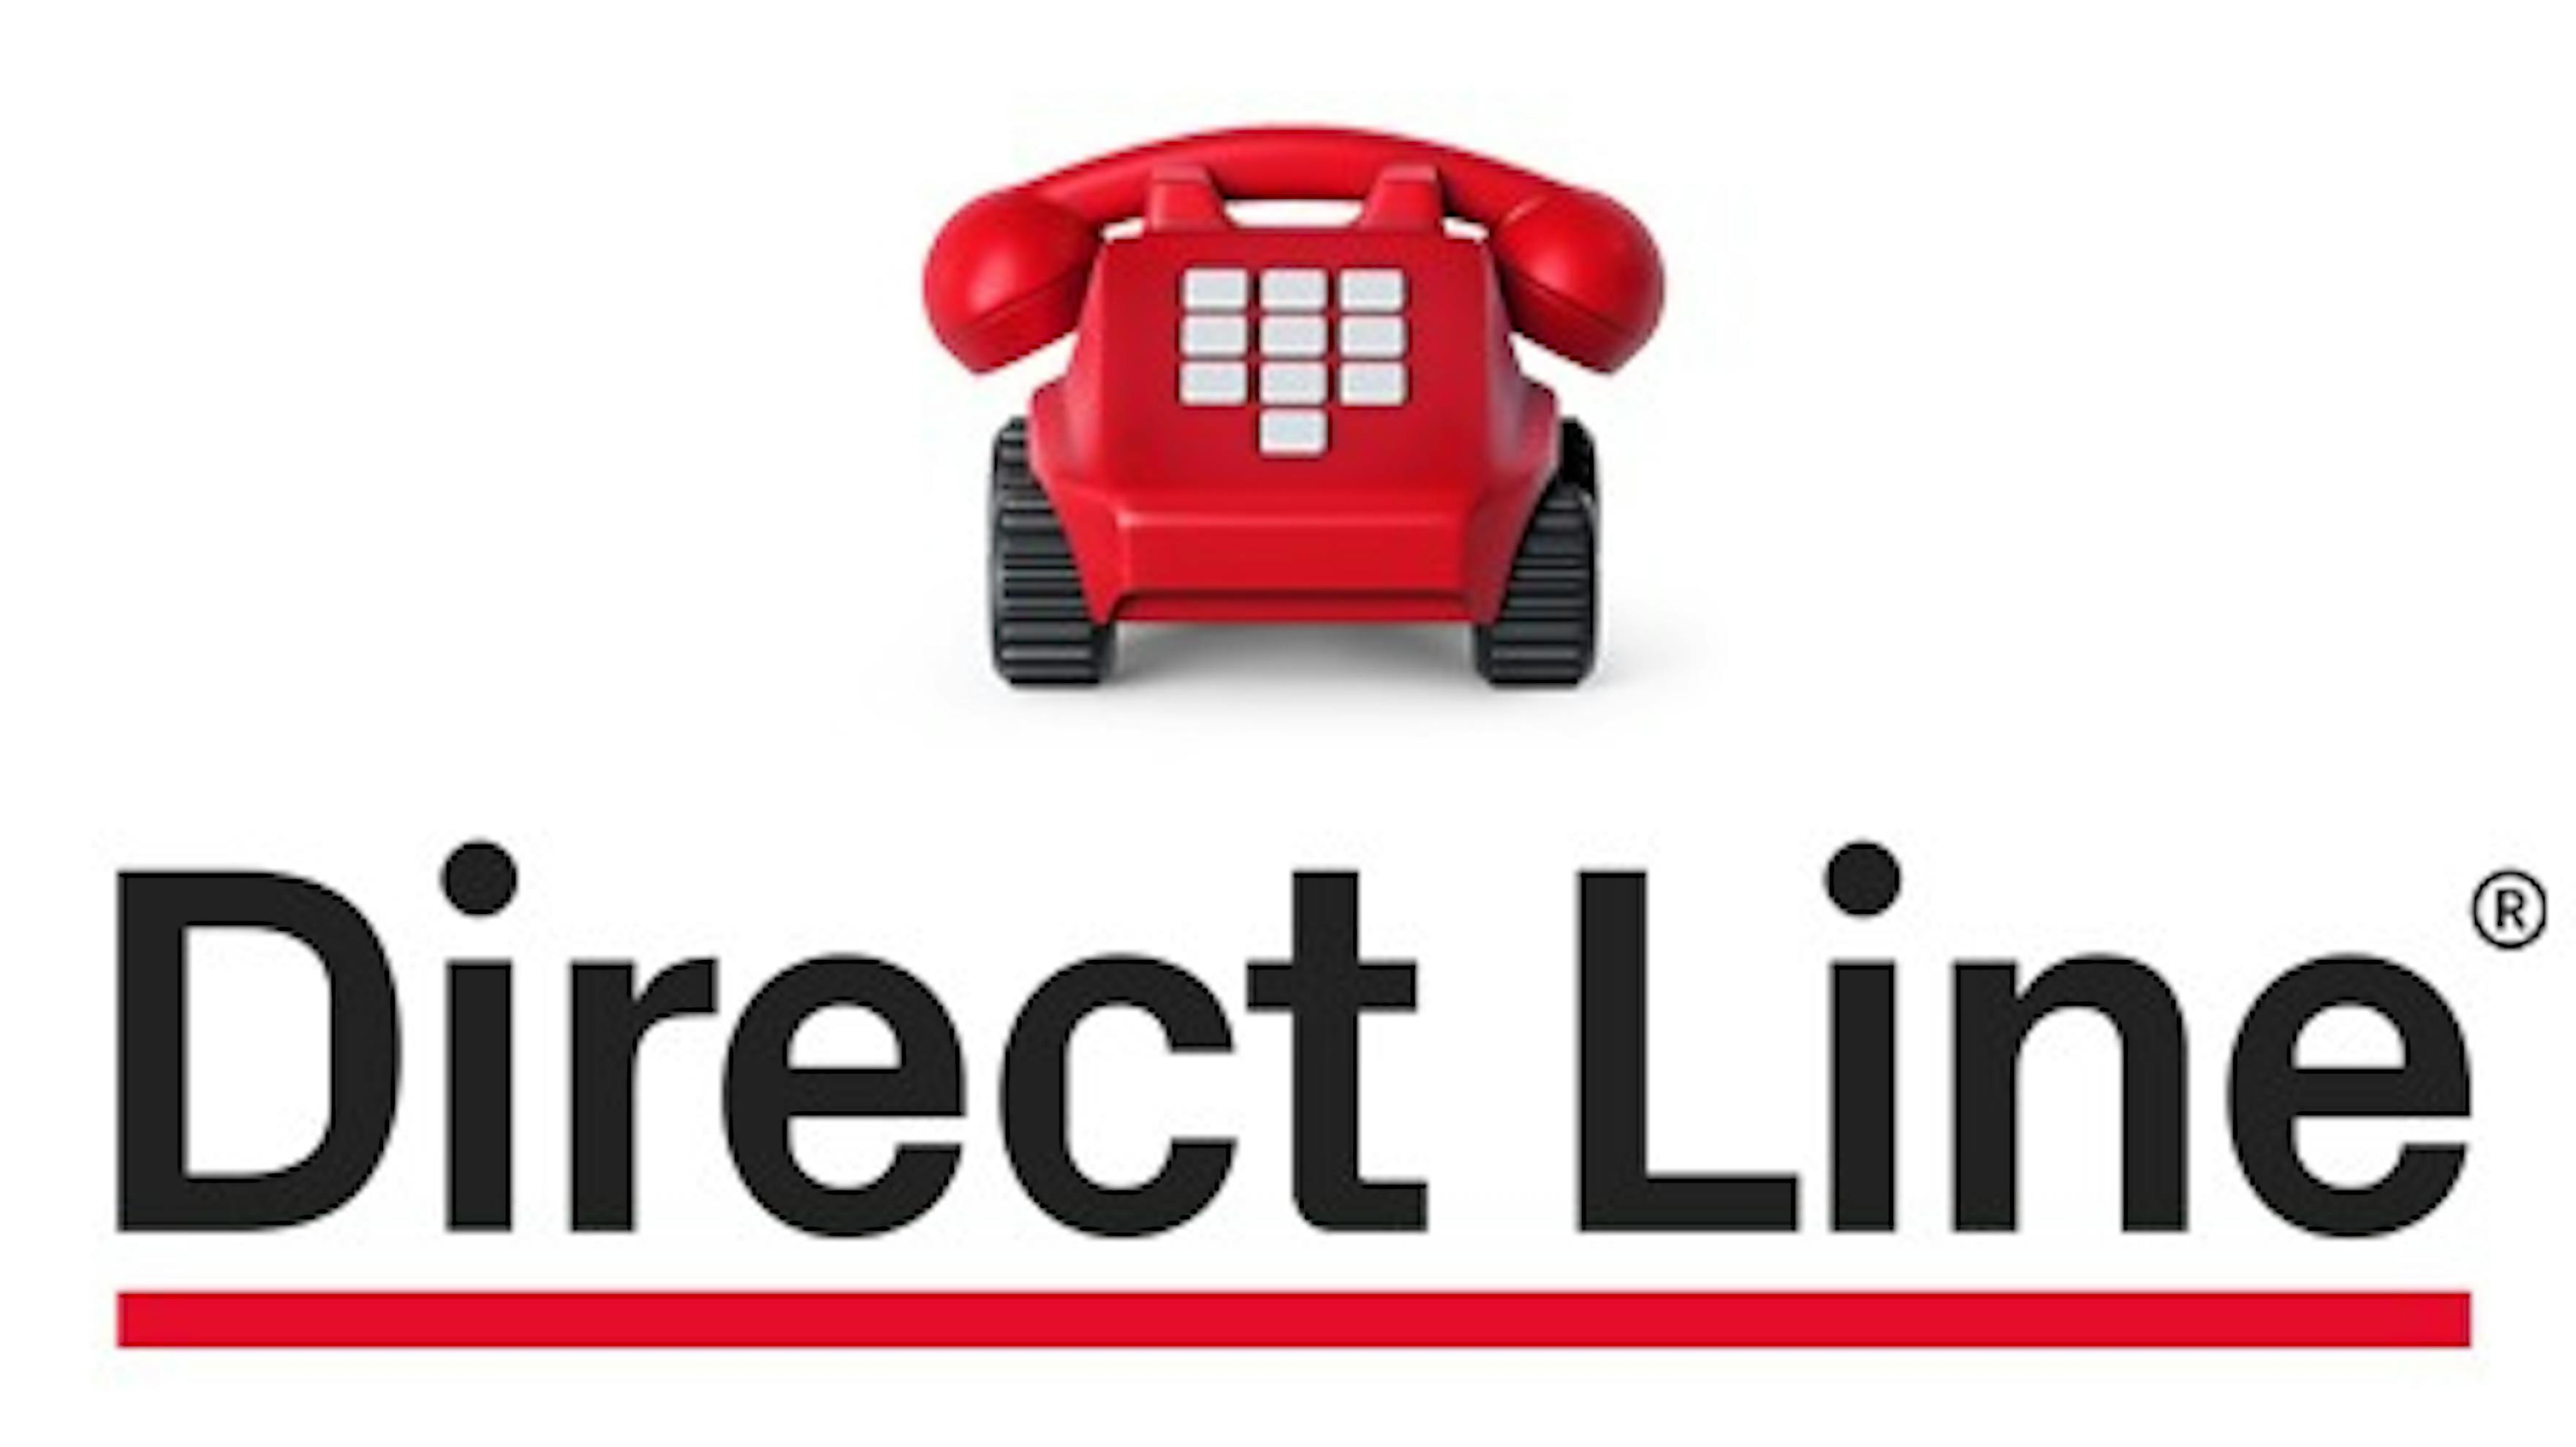 Direct line insurance jobs ipswich